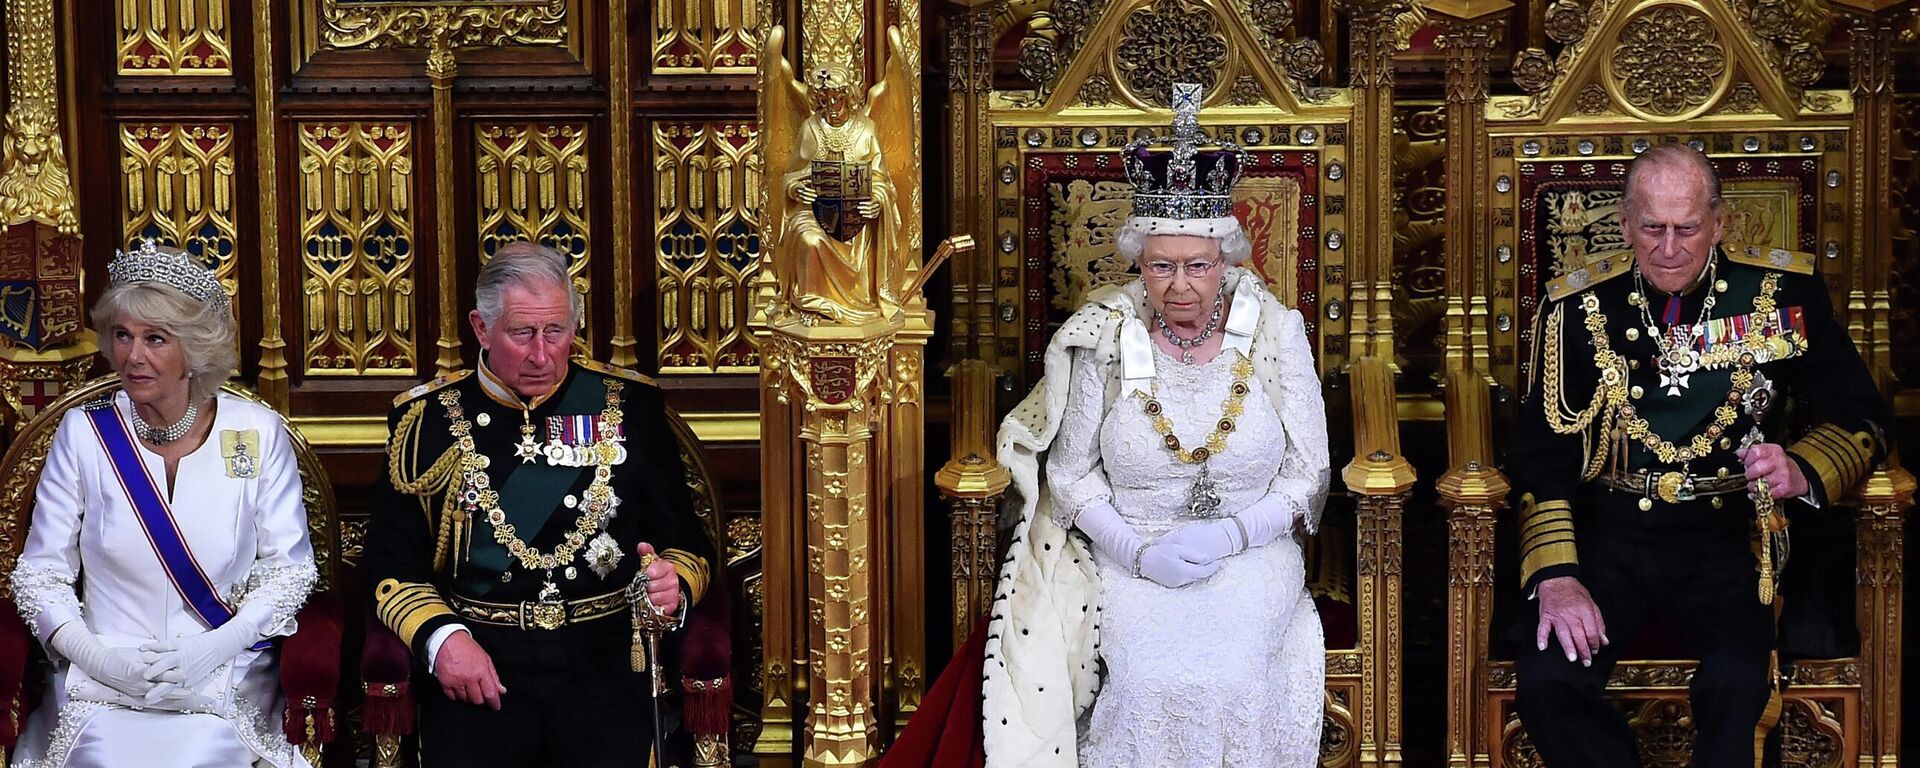 Королева Великобритании Елизавета II сидит на троне в Палате лордов, 2022 год - Sputnik Mundo, 1920, 08.09.2022